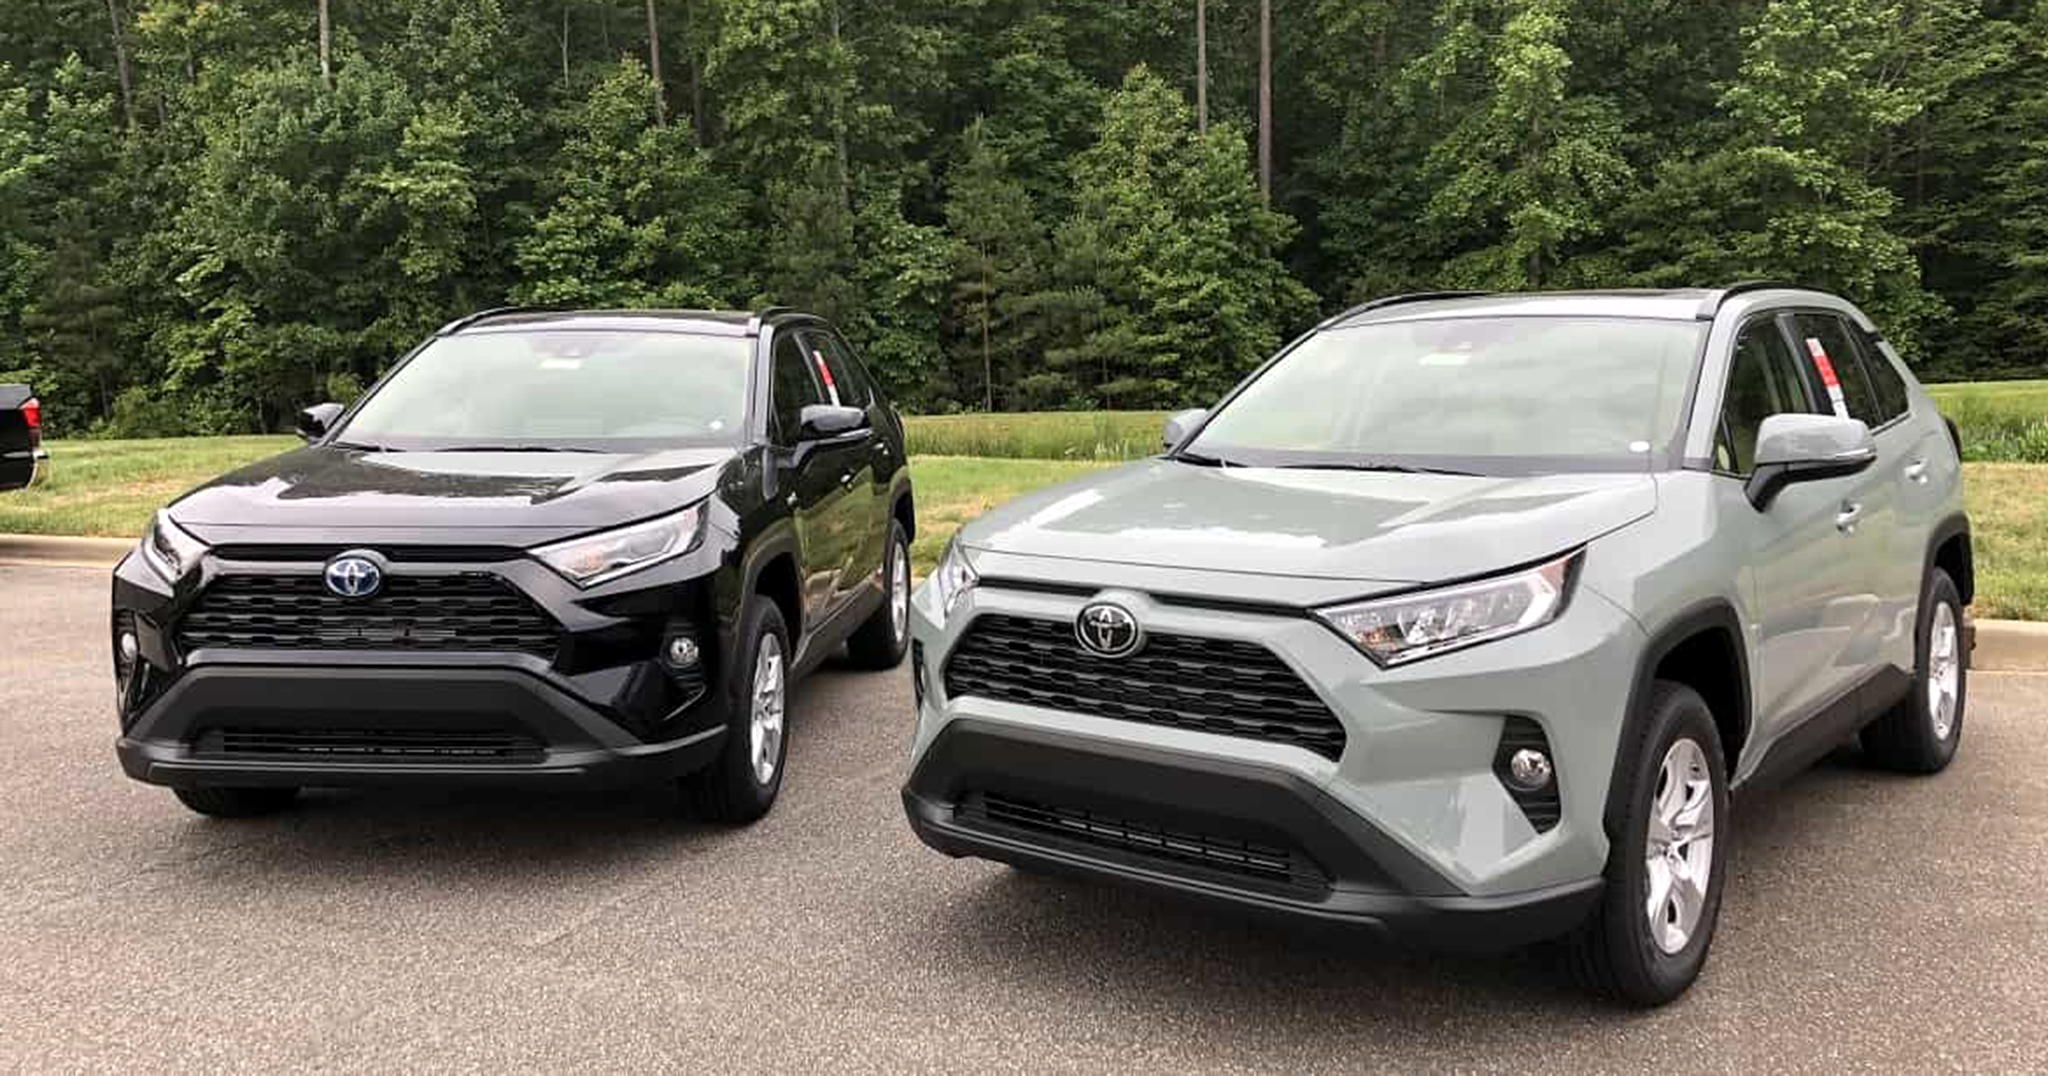 2019-toyota-rav4-hybrid-vs-gasoline-rav4-1.jpg